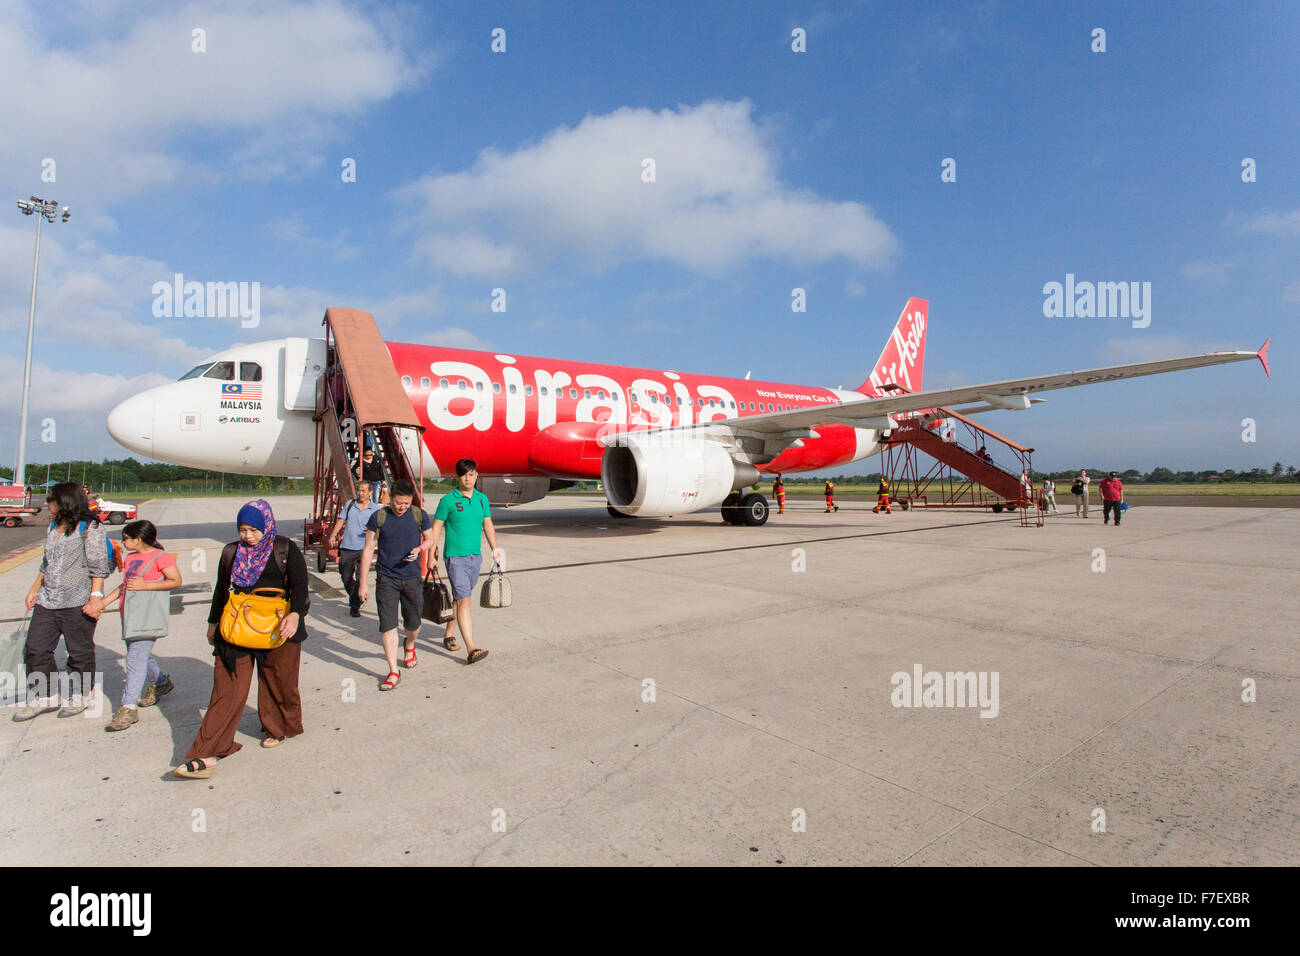 Passengers disembarking from Air Asia Airbus A320 on the tarmac at Kuala Lumpur International Airport 2 (KLIA2). Aircraft regist Stock Photo